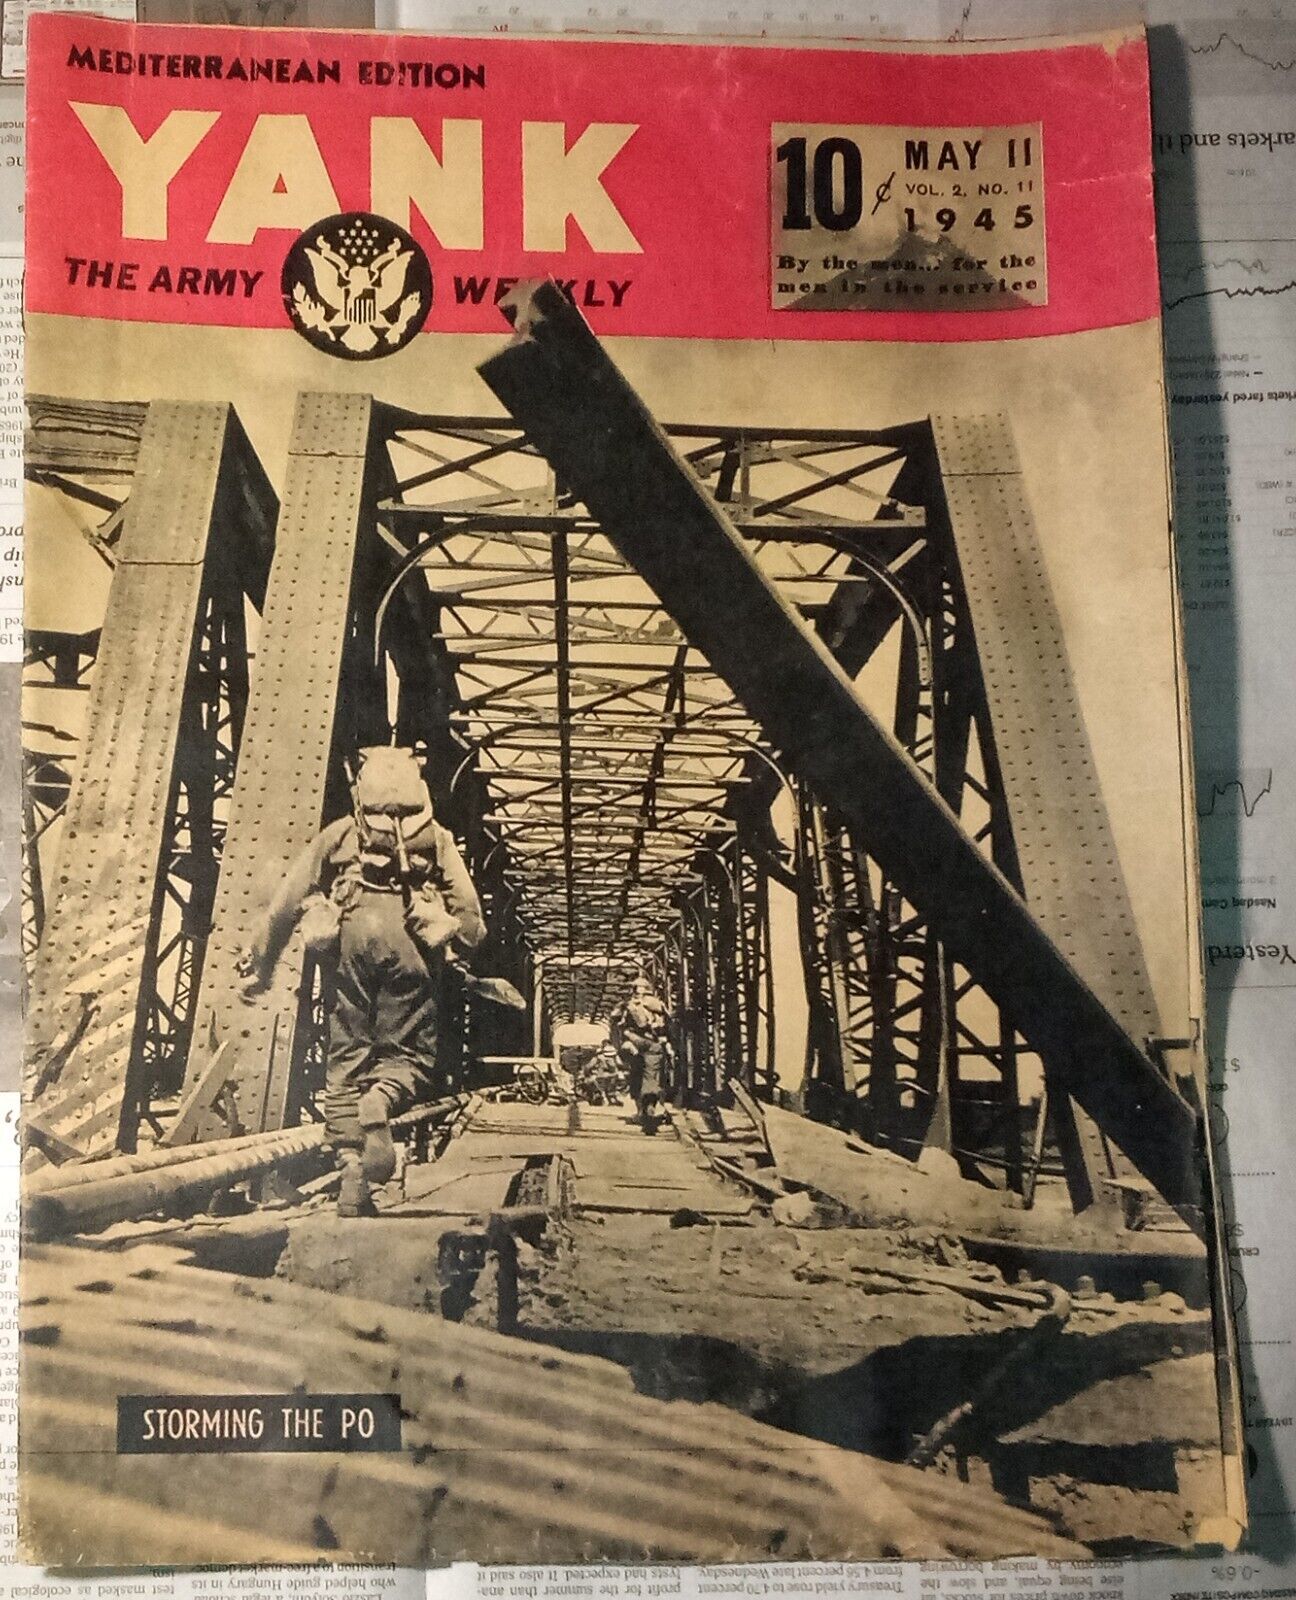 YANK the Army Weekly - May 11, 1945 - Mediterranean Edition